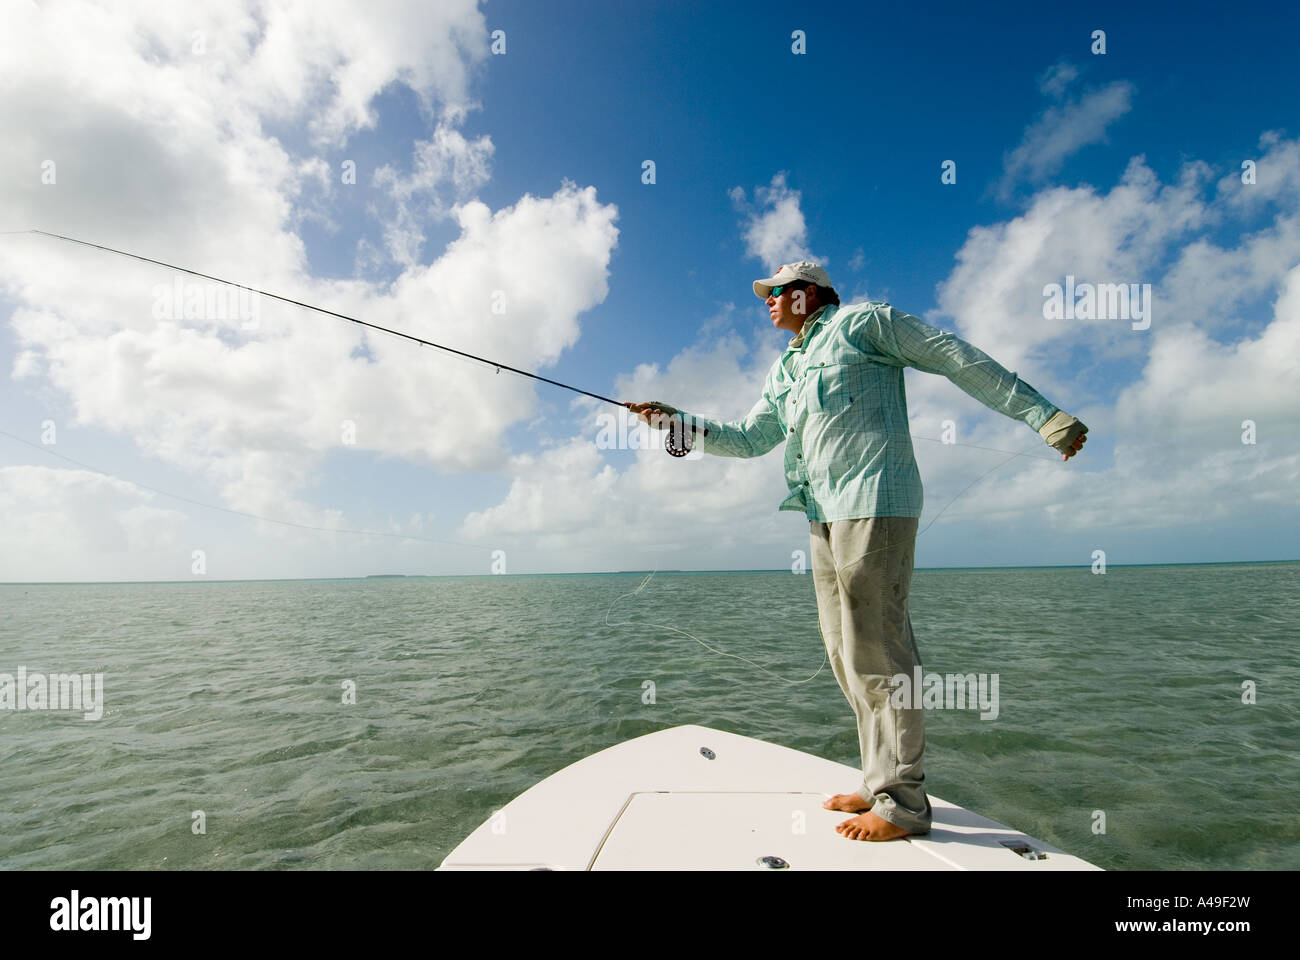 USA Florida Keys Fisherman fly fishing from boat in salt water